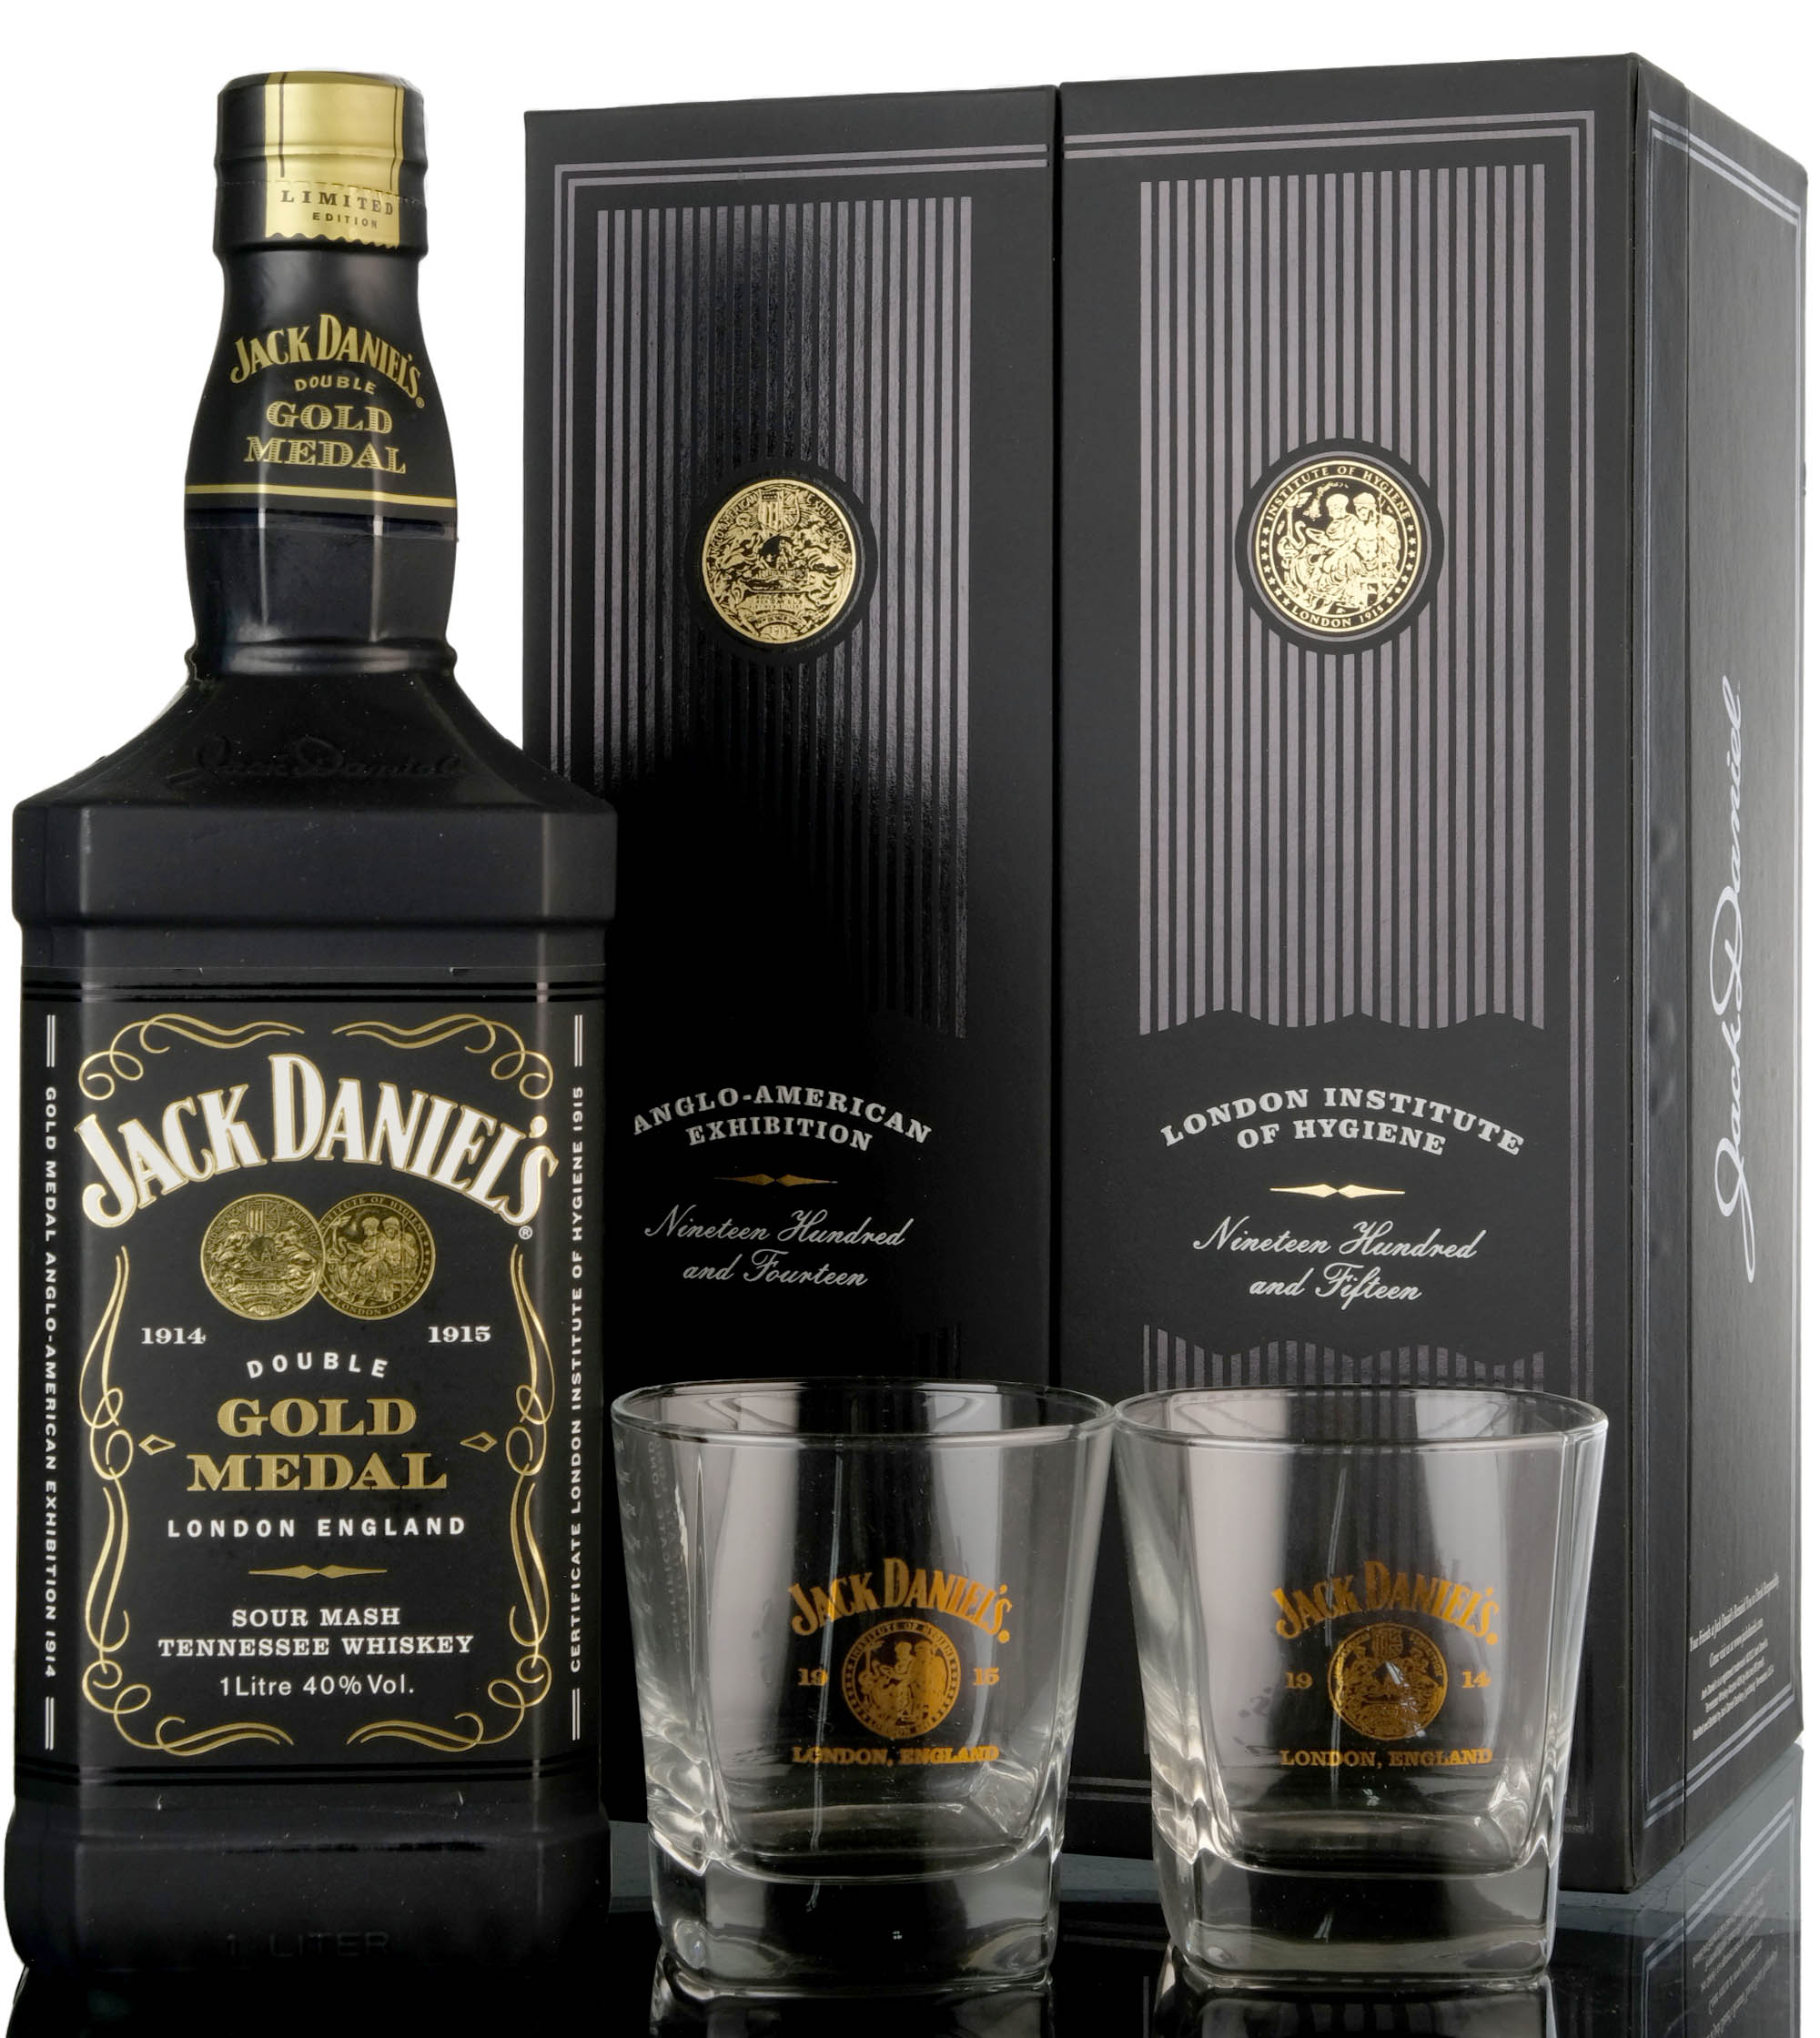 Jack Daniels Double Gold Medal London 1914-1915 - 2012 Release - 1 Litre - Presentation Se